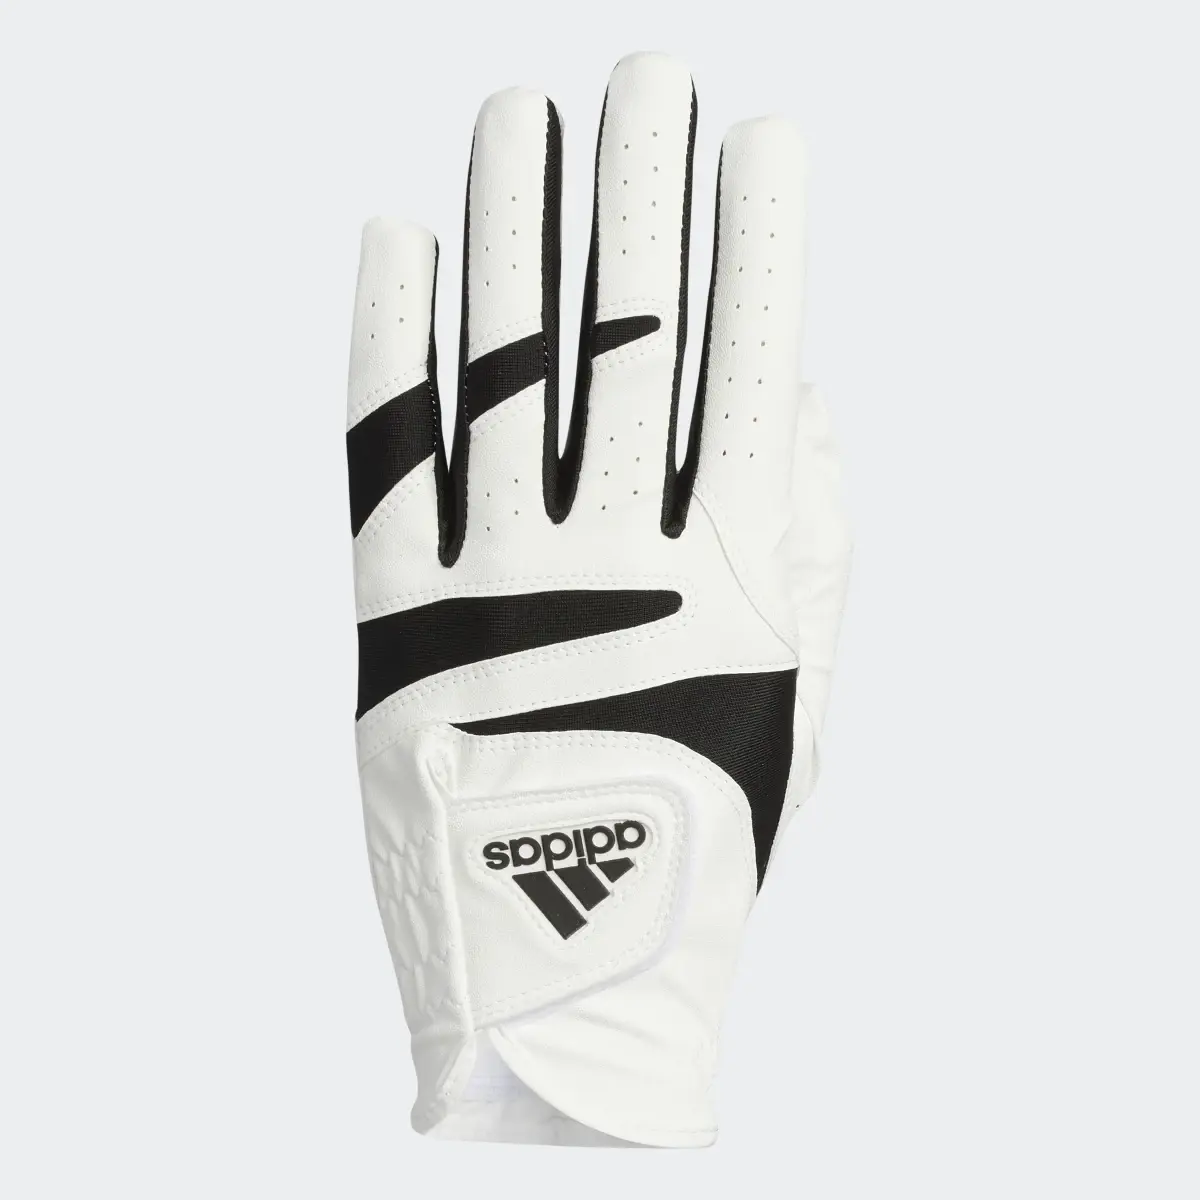 Adidas Guanto aditech 22 Glove. 1